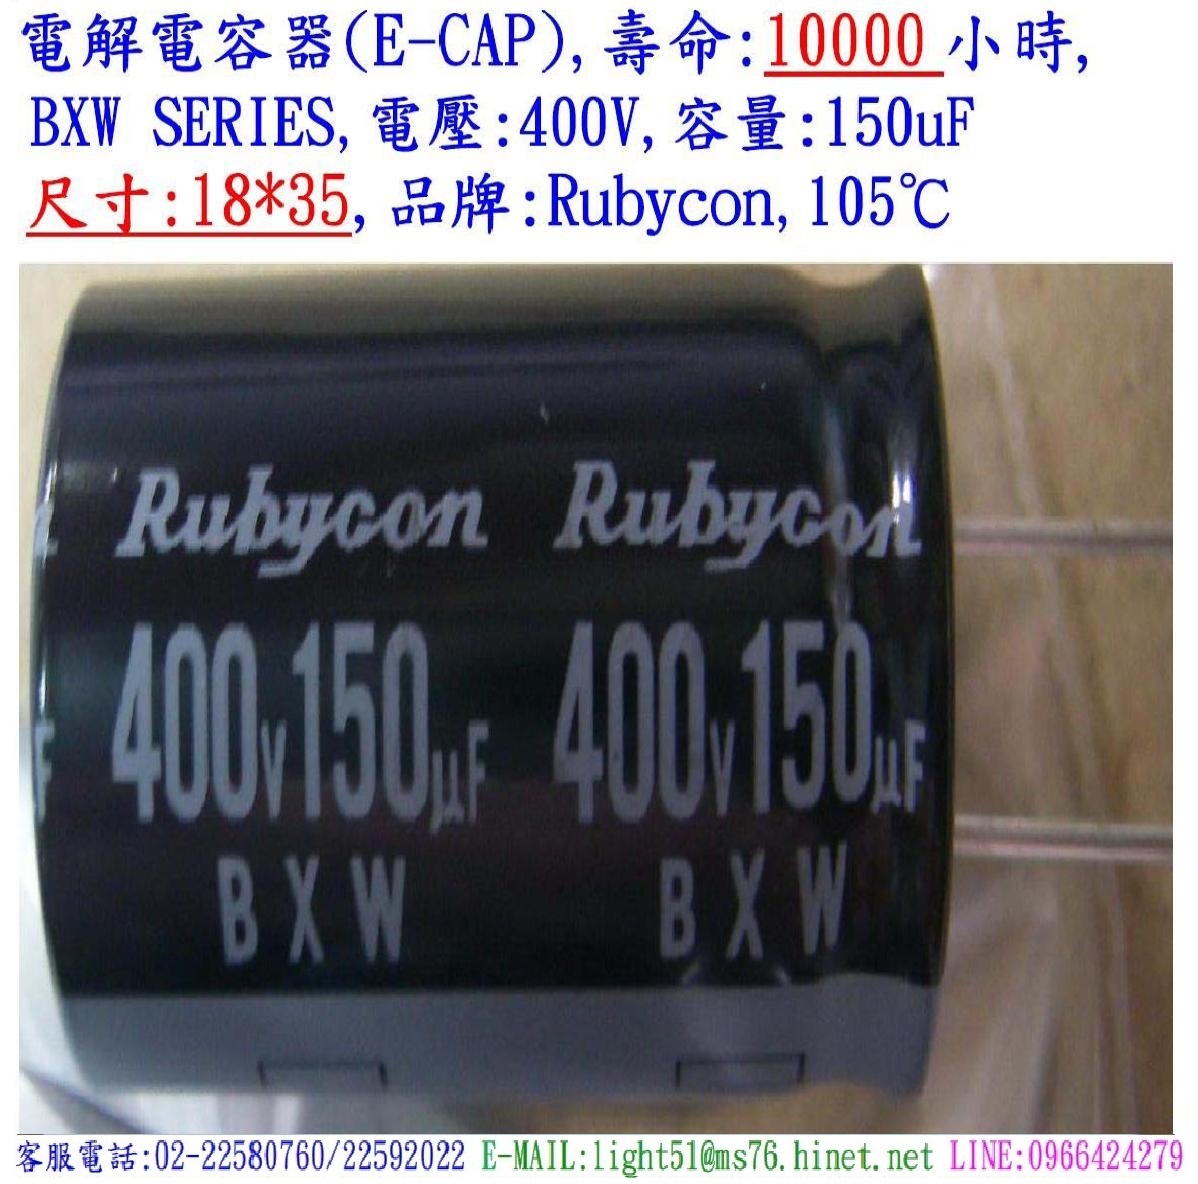 BXW,400V,150uF,尺寸:18*35,電解電容器,壽命:10000小時,Rubycon